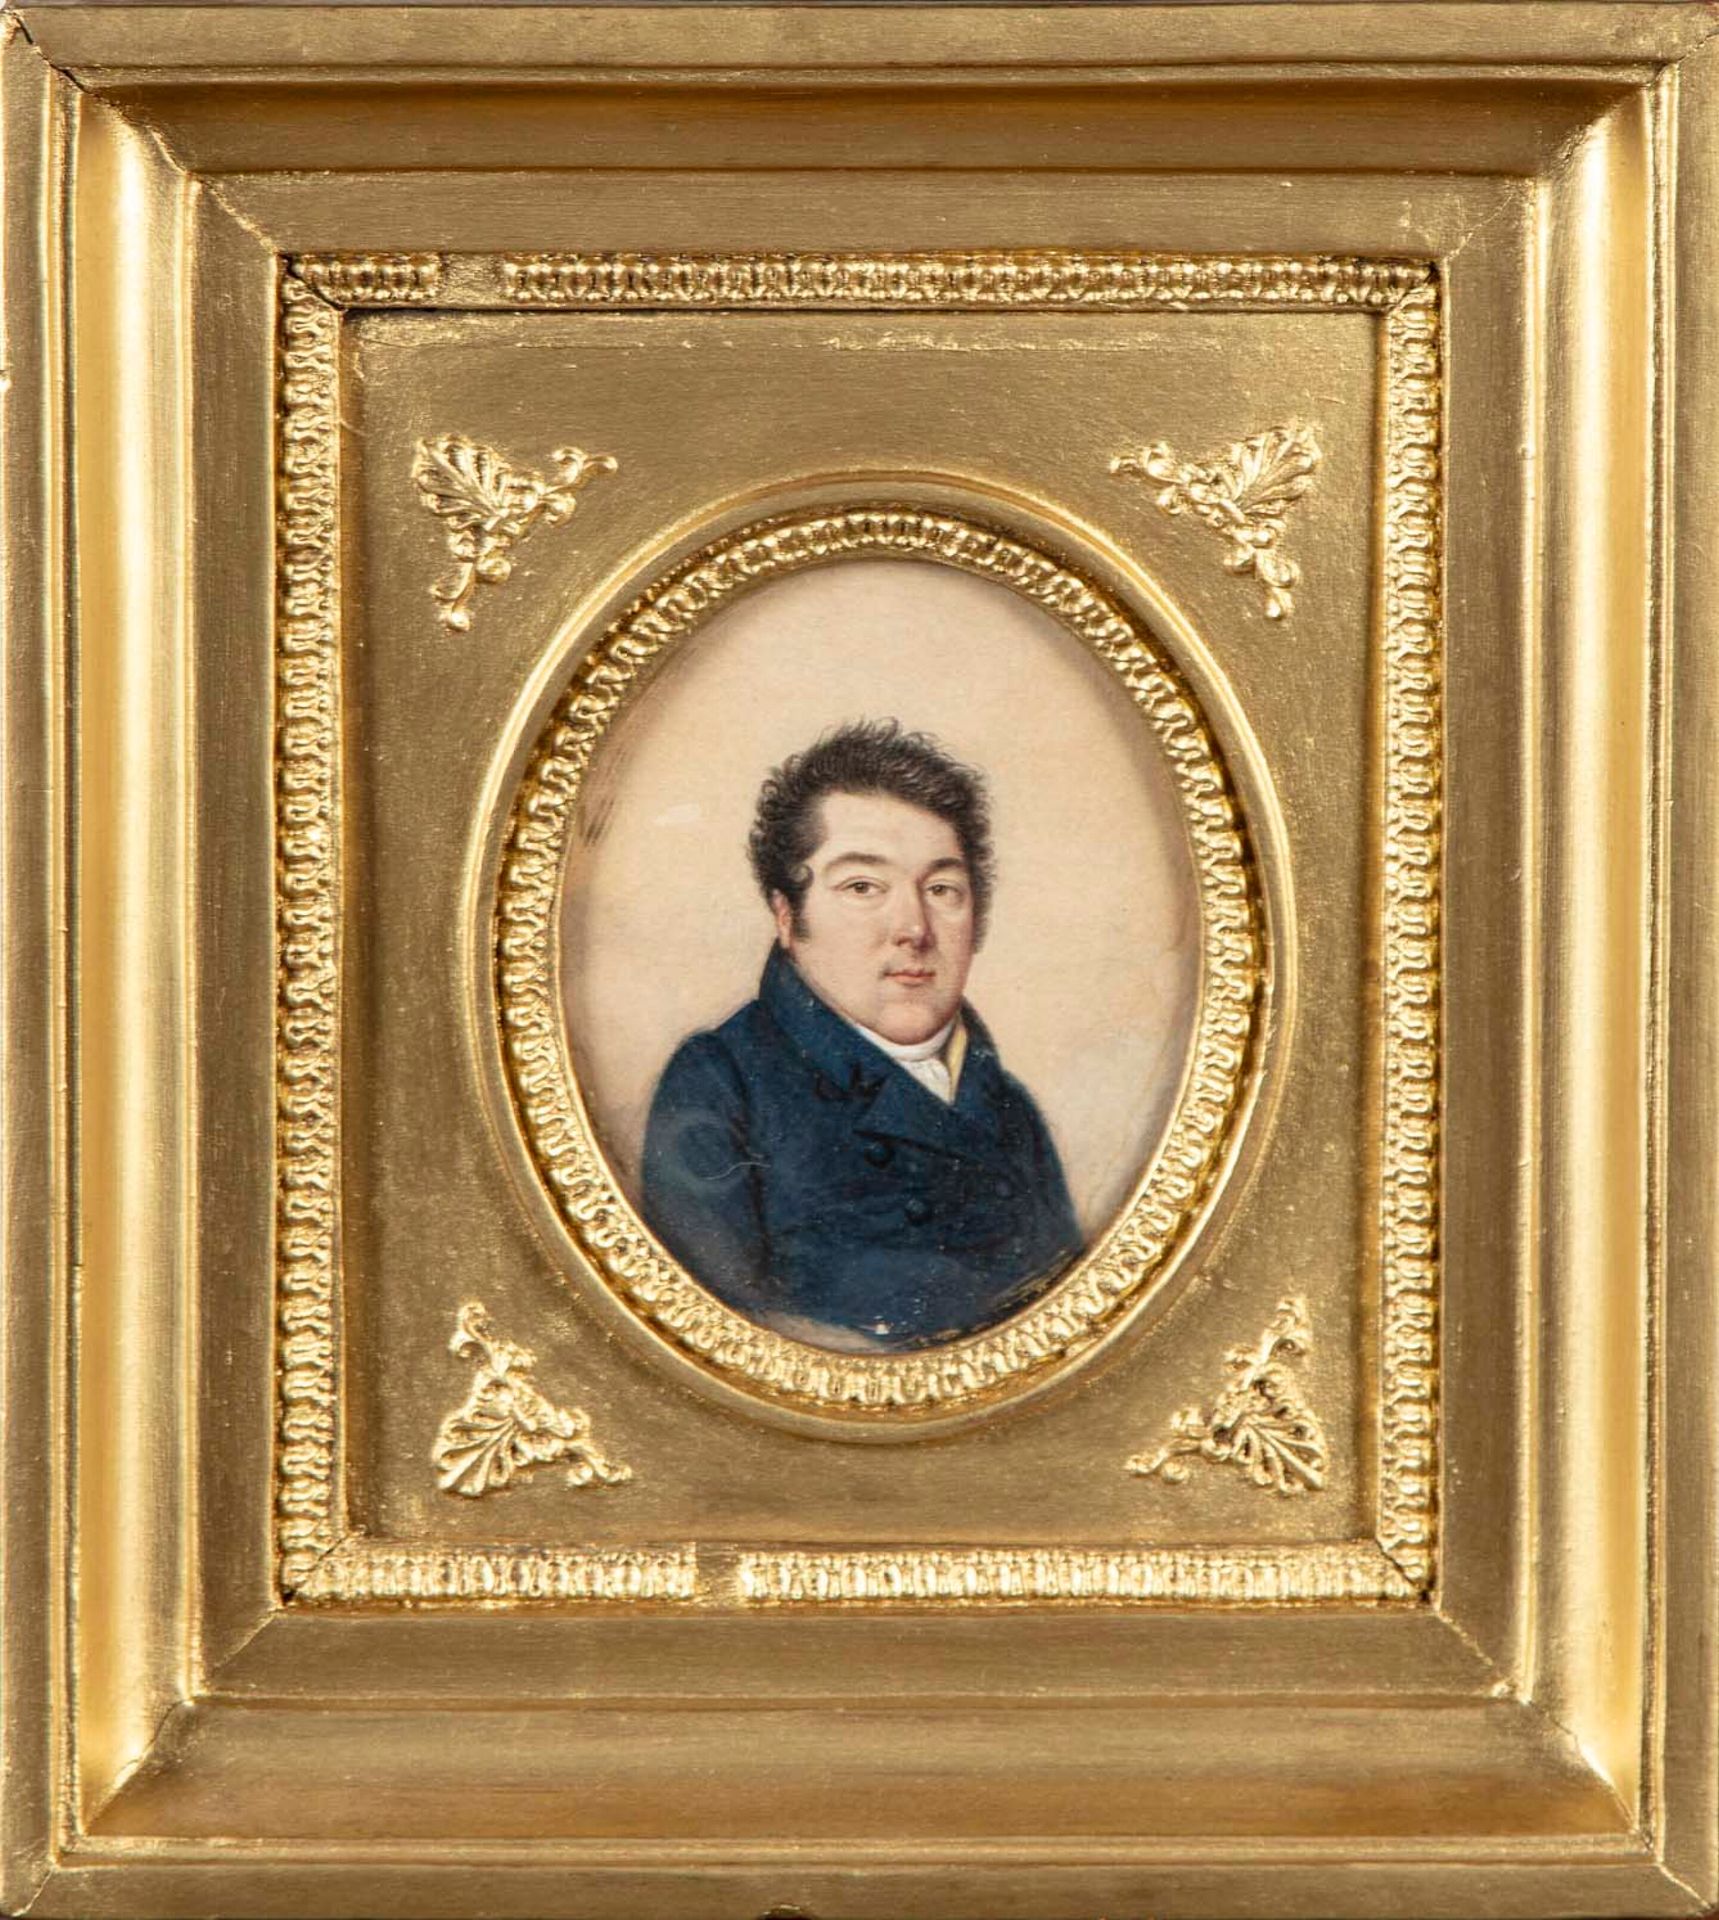 ECOLE FRANCAISE XIXè ESCUELA FRANCESA del siglo XIX

Retrato de un hombre con le&hellip;